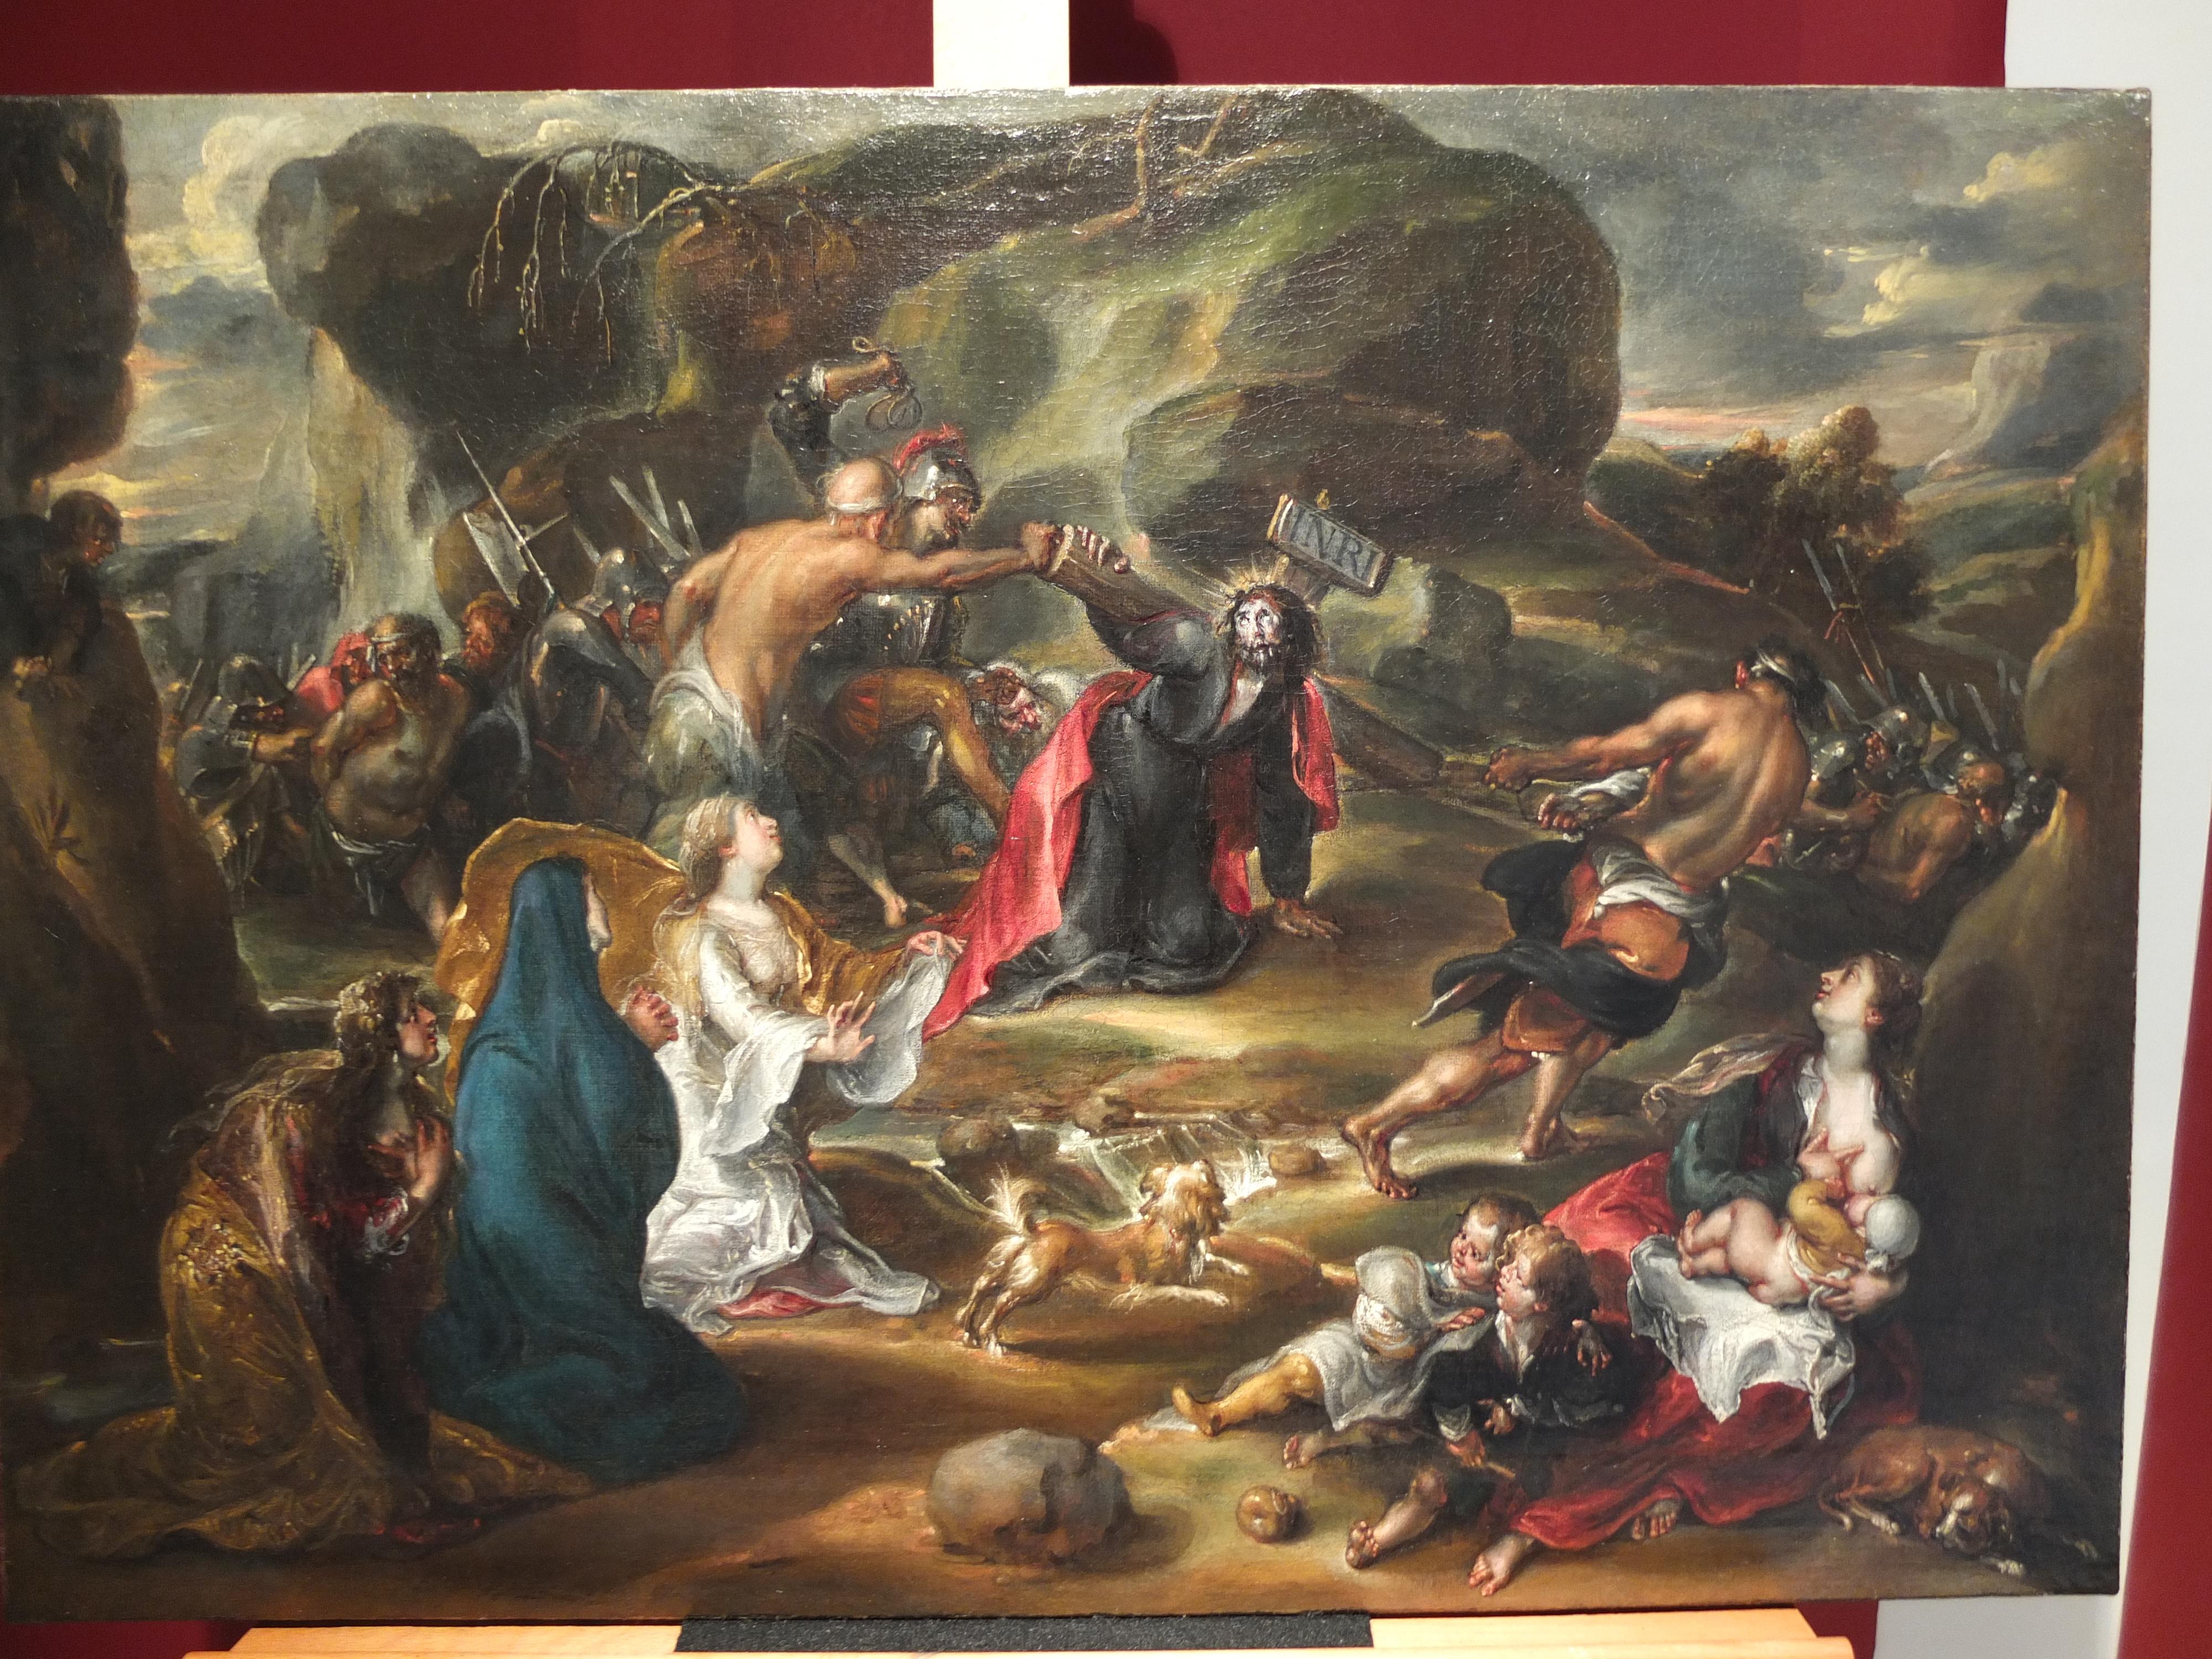 Christ Carrying the Cross, Old Master, Flemish, De Vos, Religious Scene, Rubens - Baroque Painting by Simon de Vos